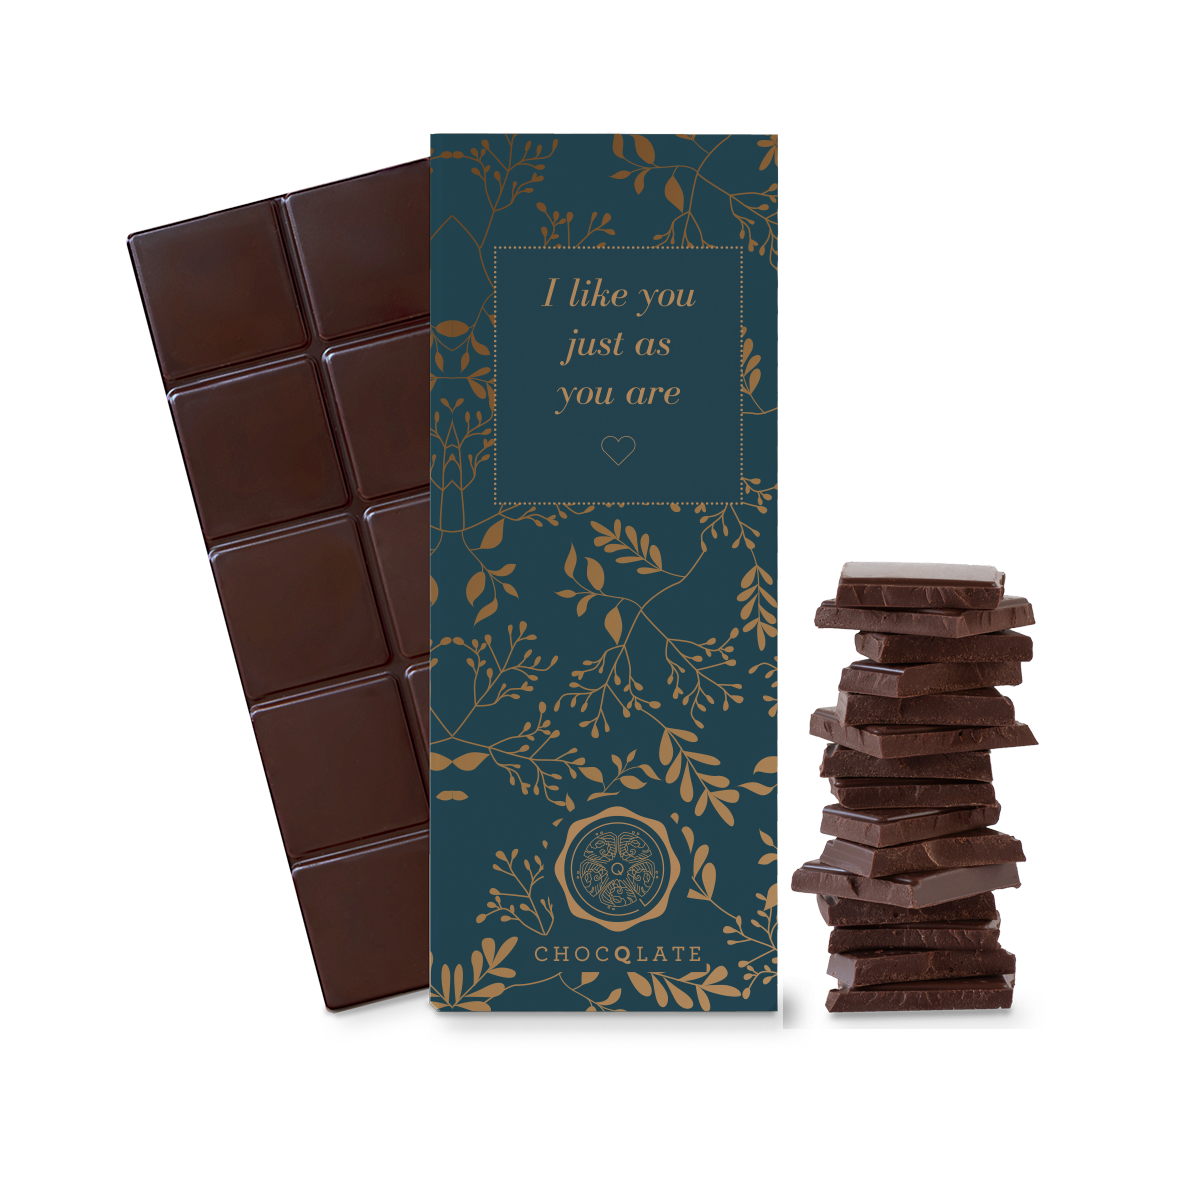 "I like you just as you are" CHOCQLATE organic chocolate 50% cacao